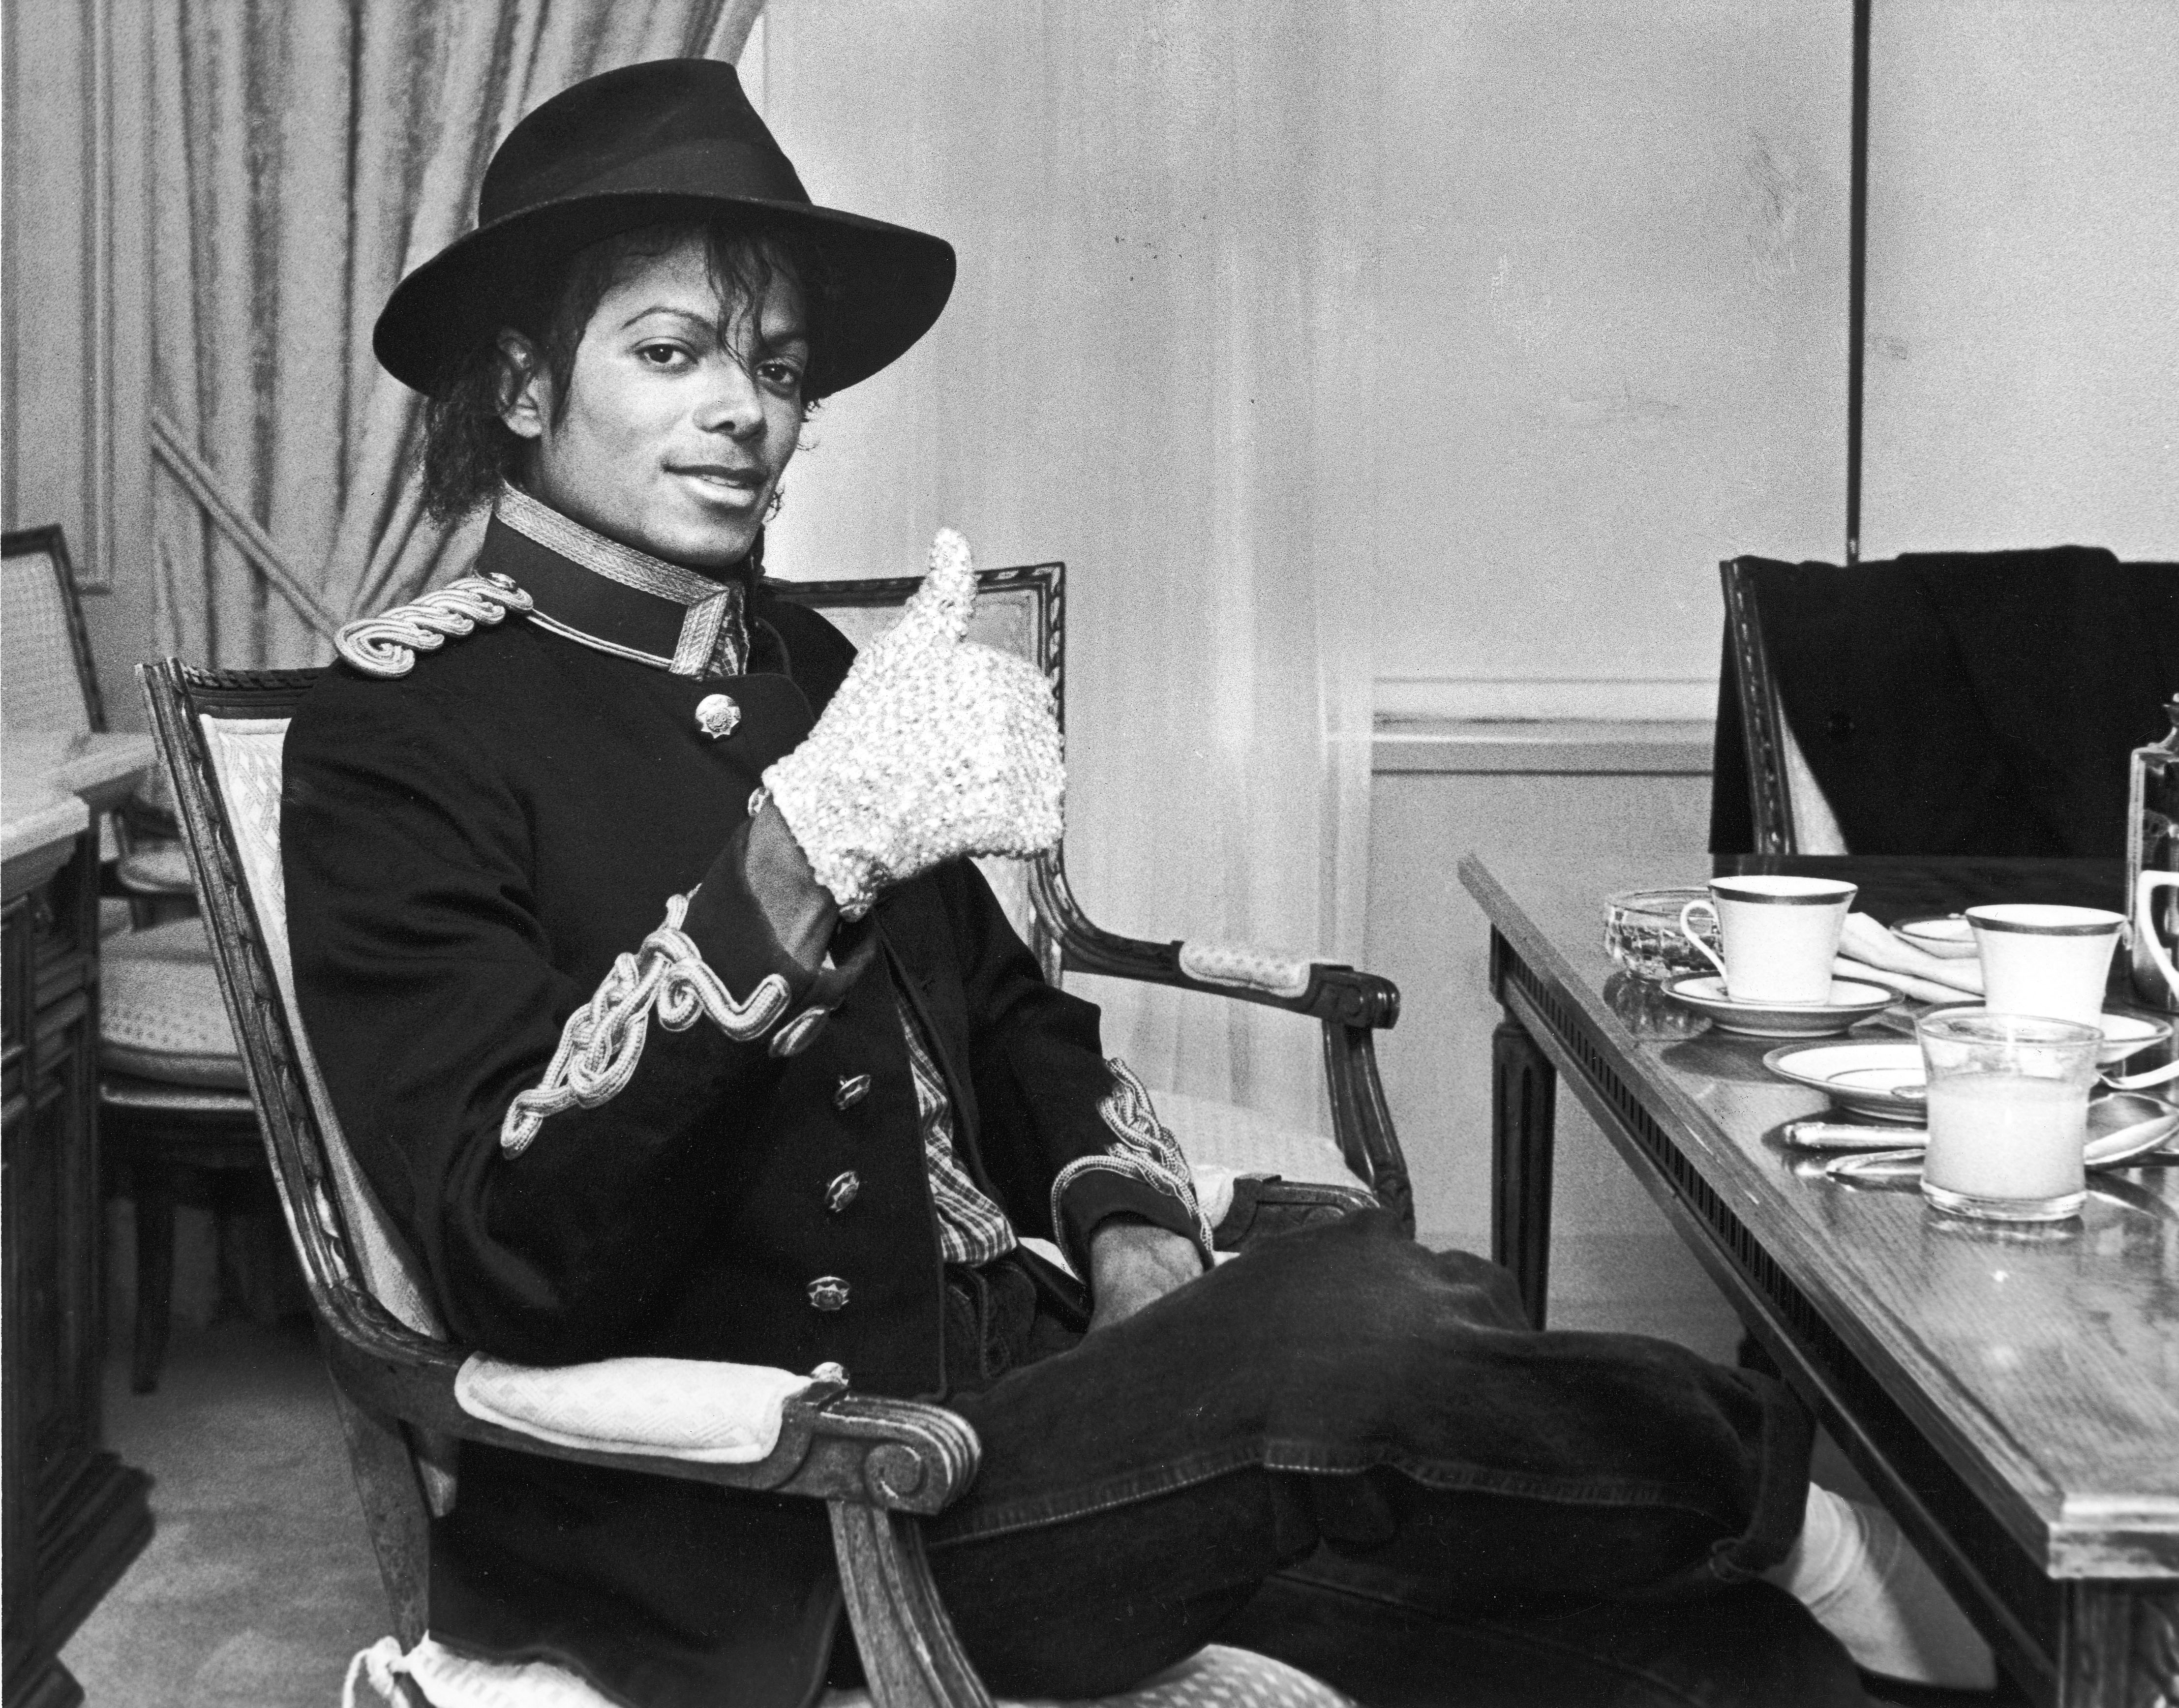 Michael Jackson wearing a hat